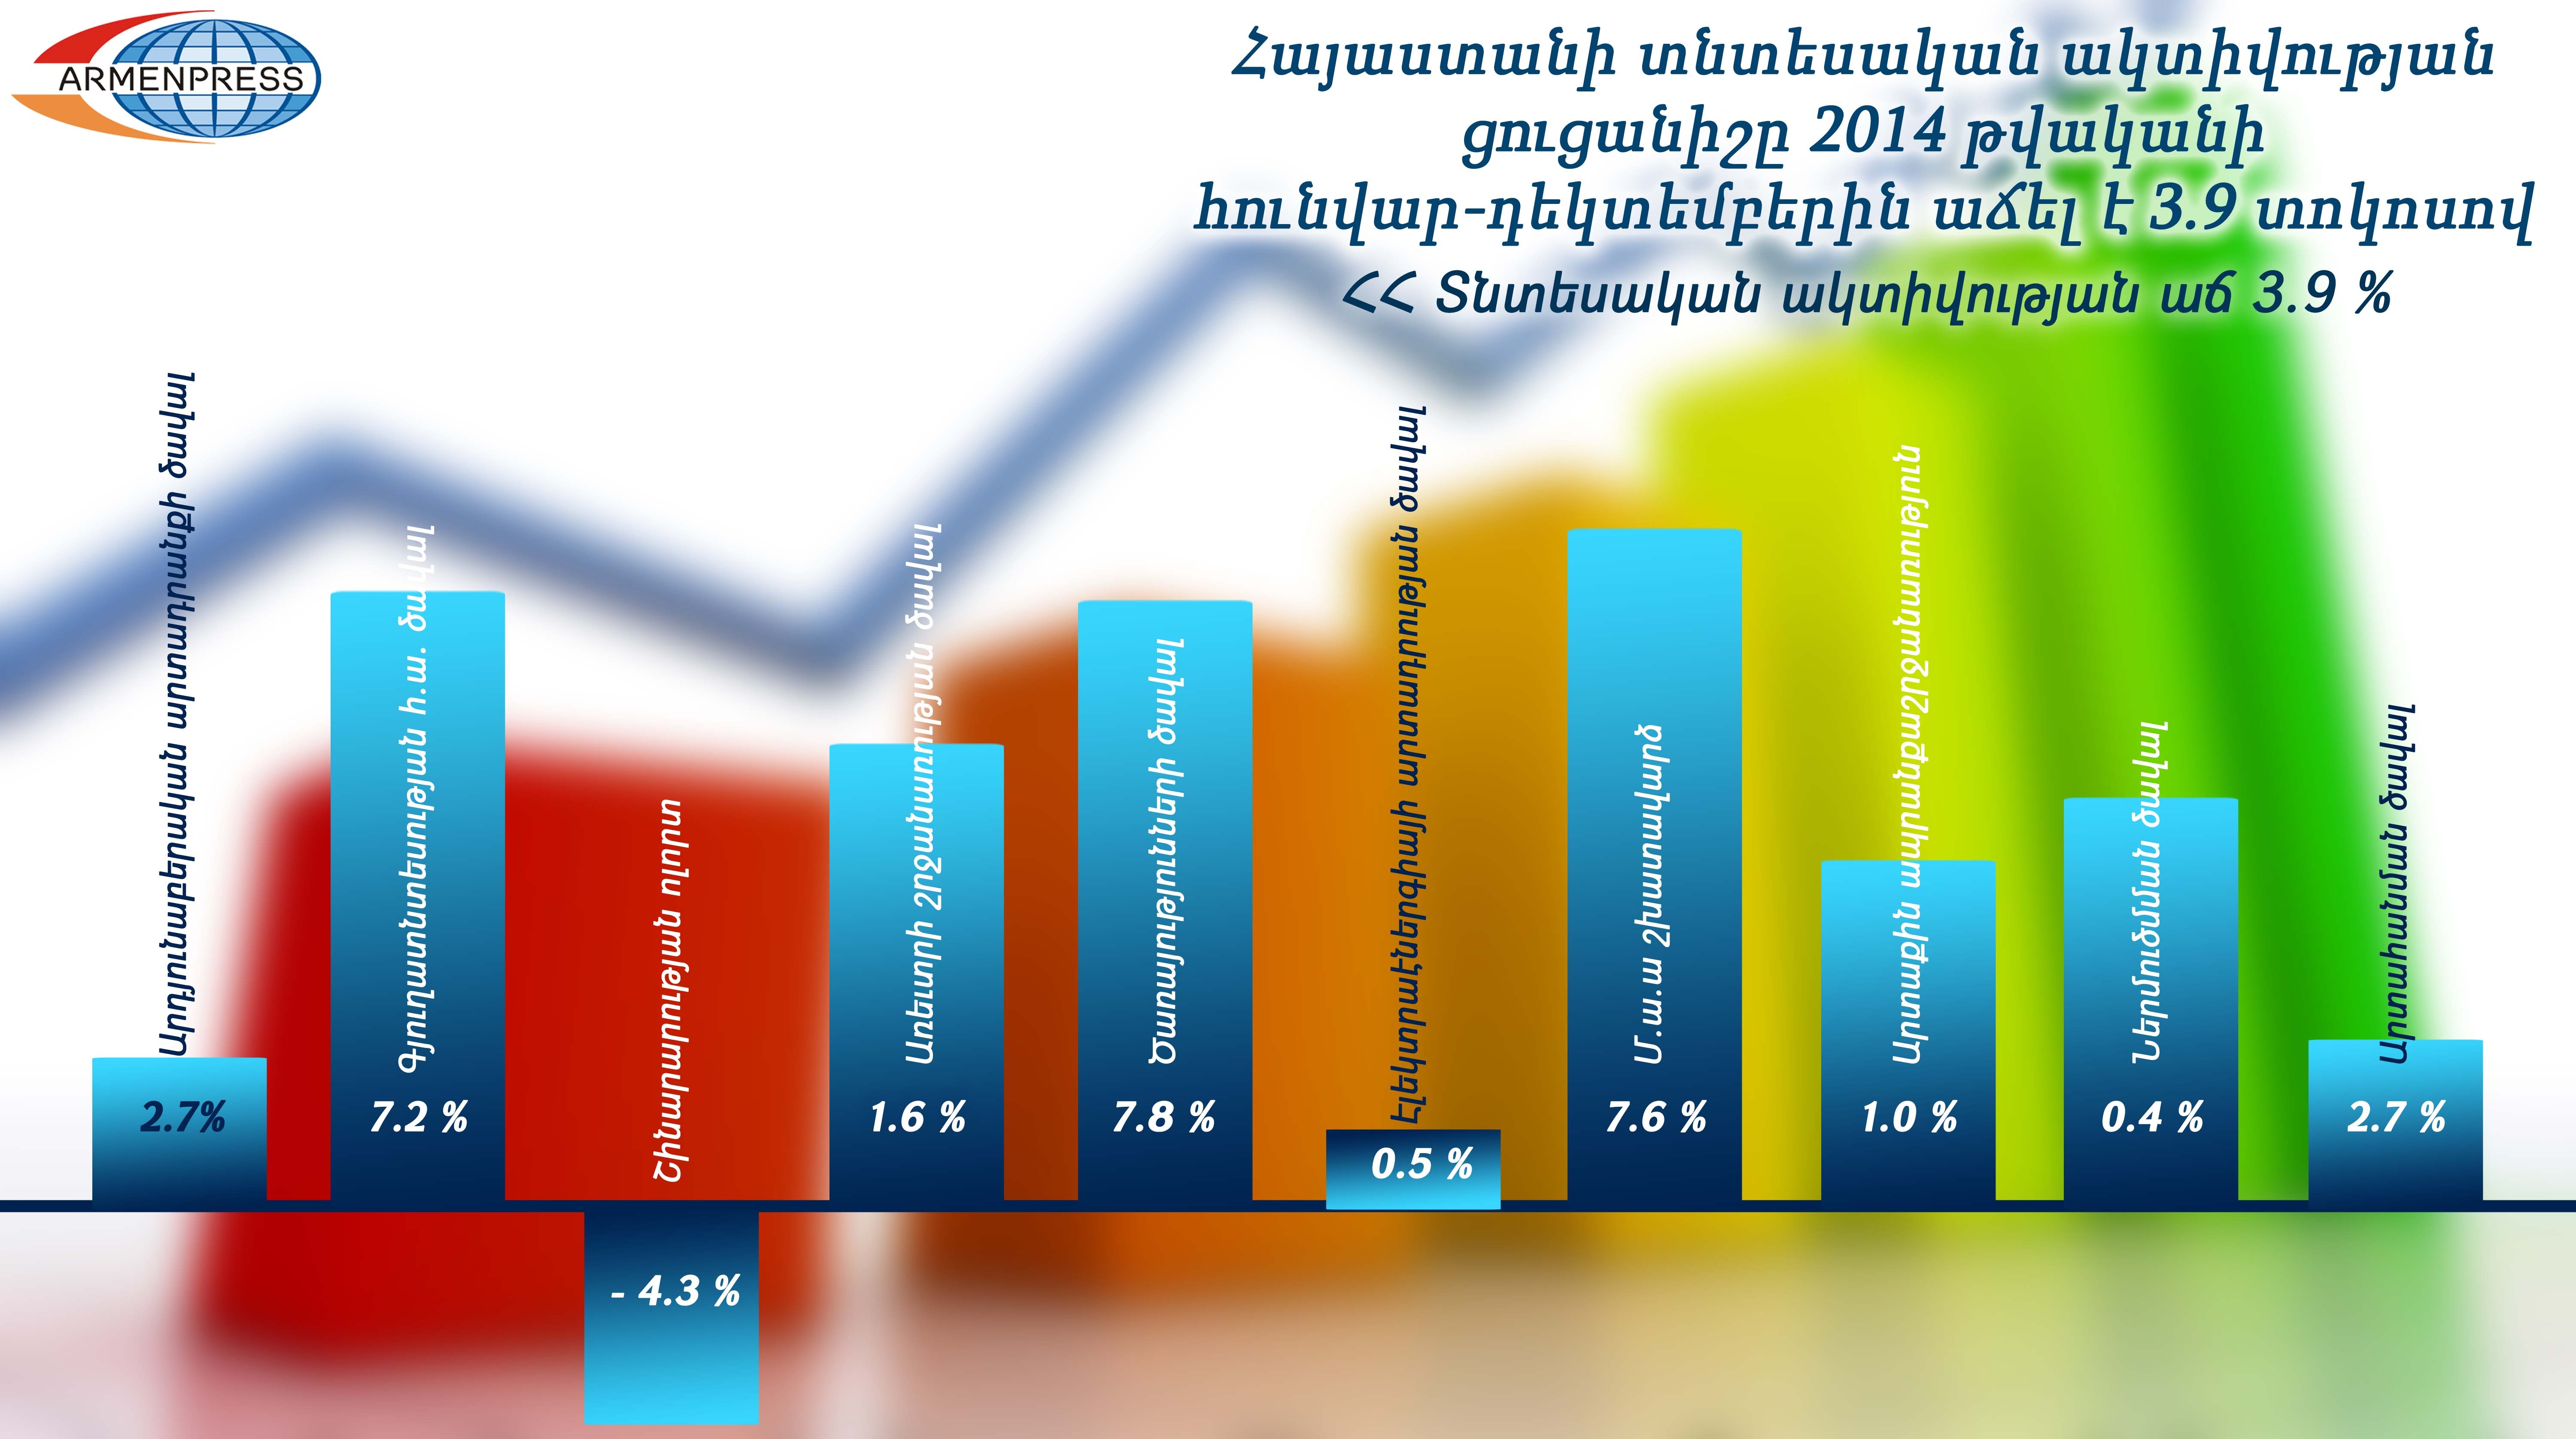 Armenia saw 3.9 rise of economic activity last year ARMENPRESS